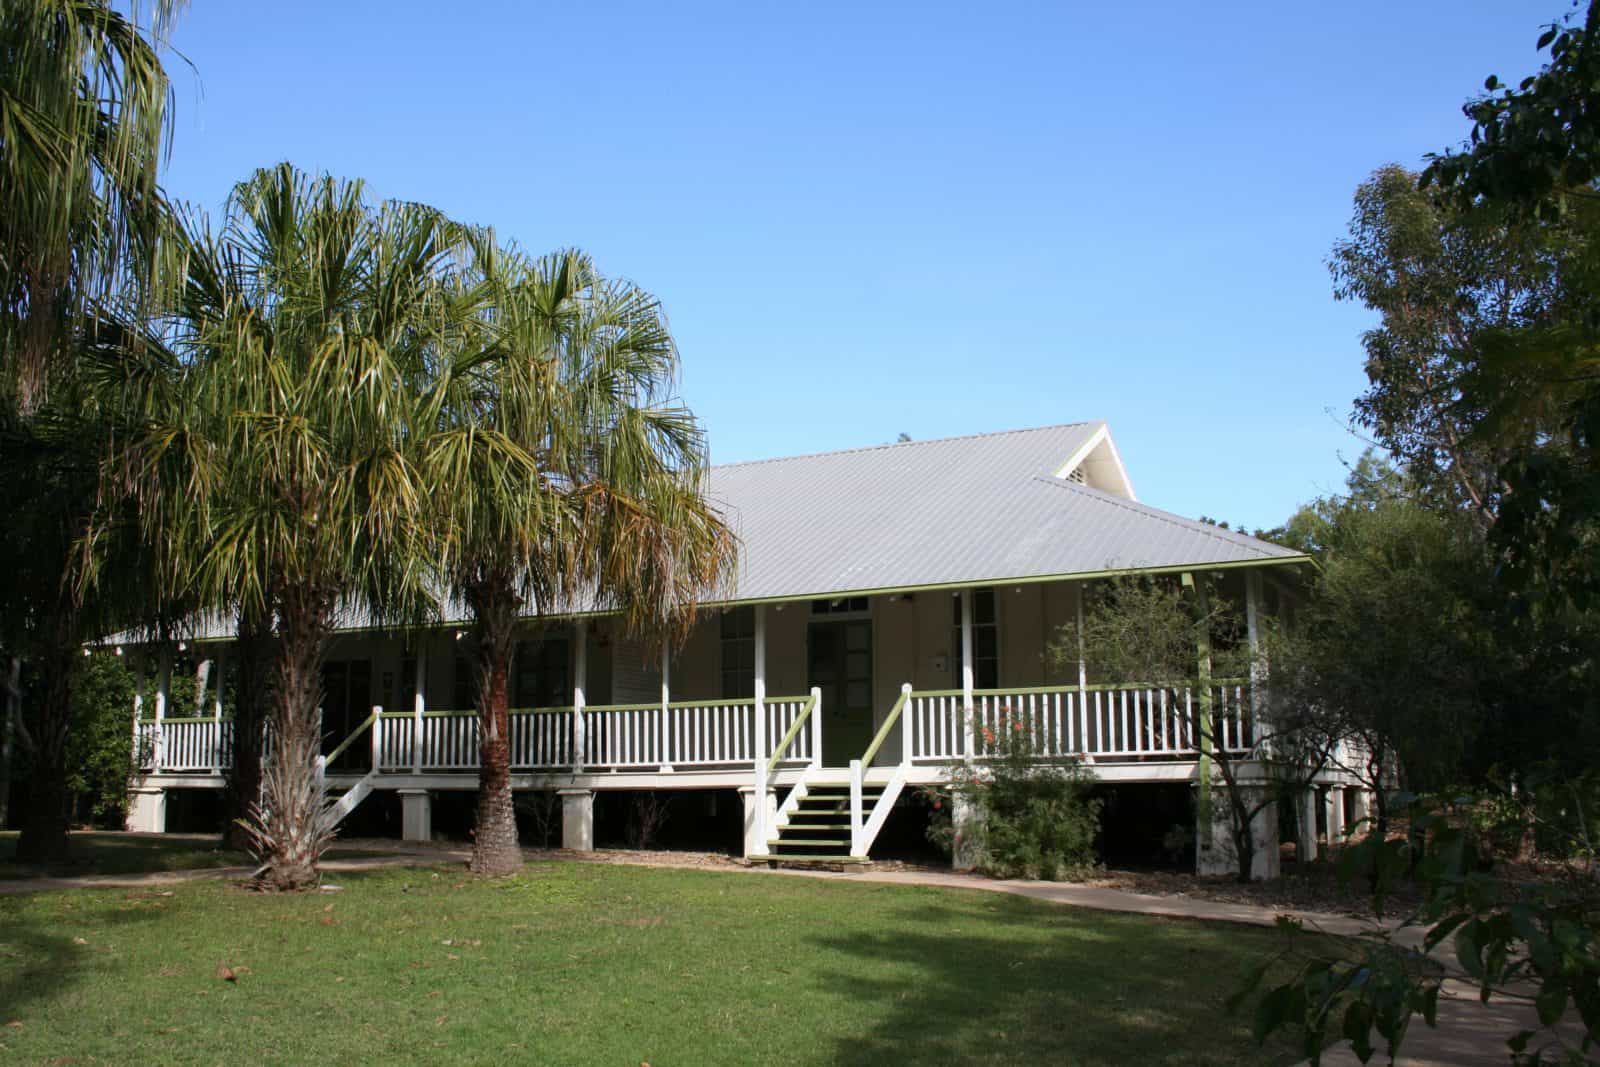 Historic Queenslander building at Pallarenda